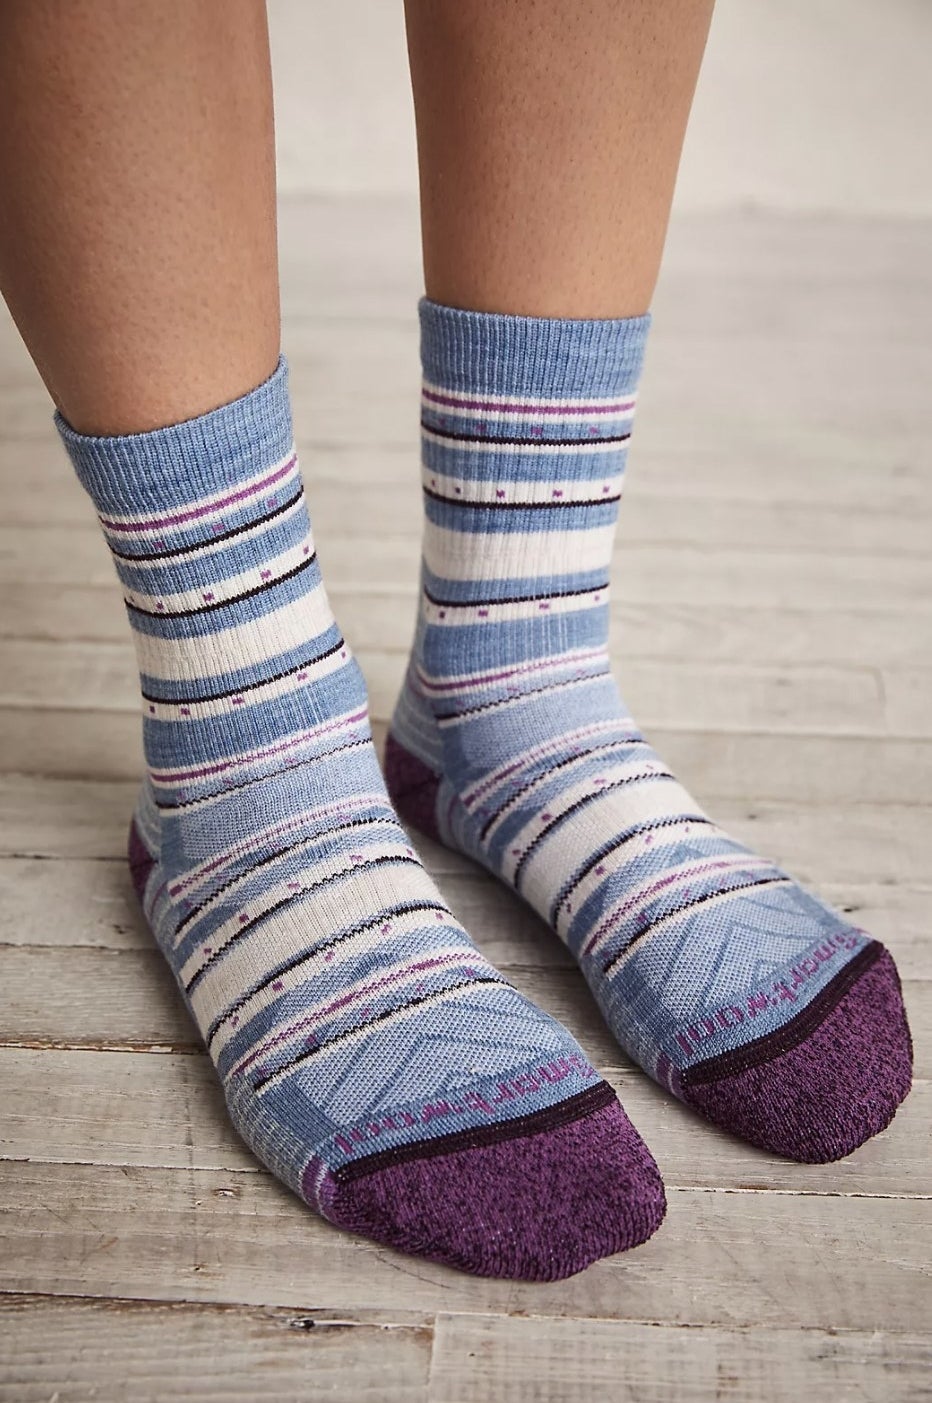 The purple striped socks